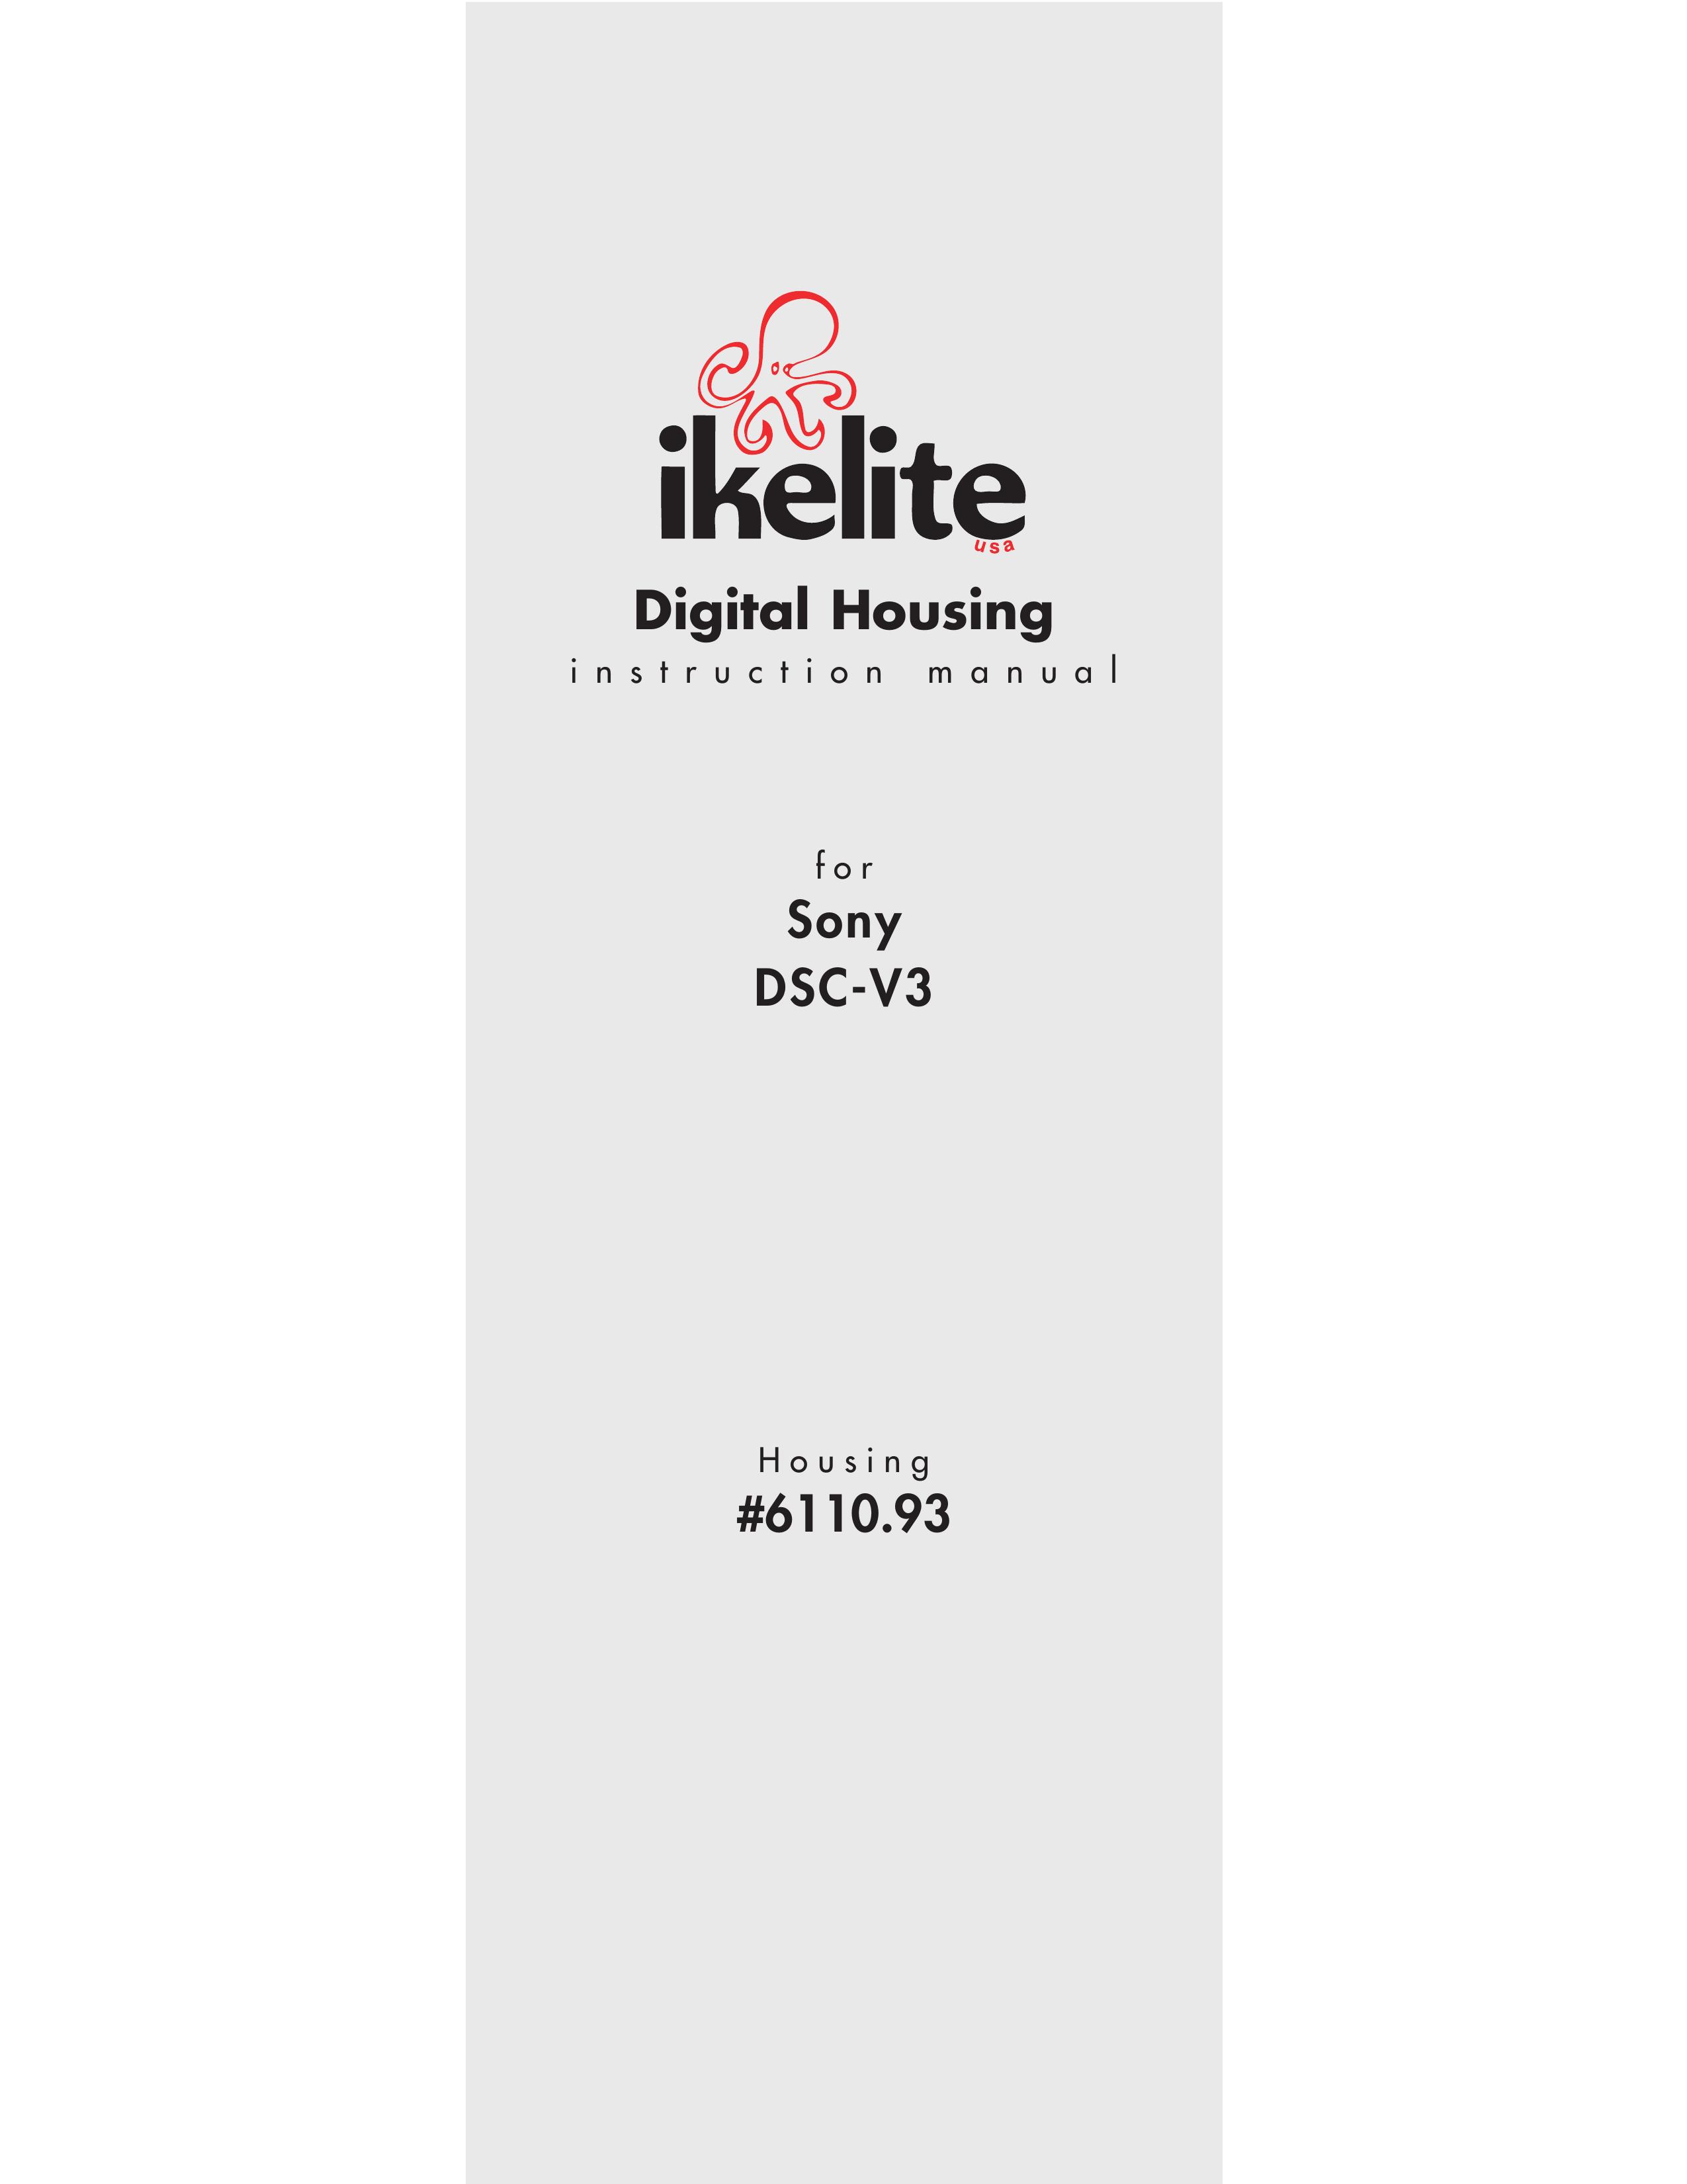 Ikelite DSC-V3 Digital Camera User Manual